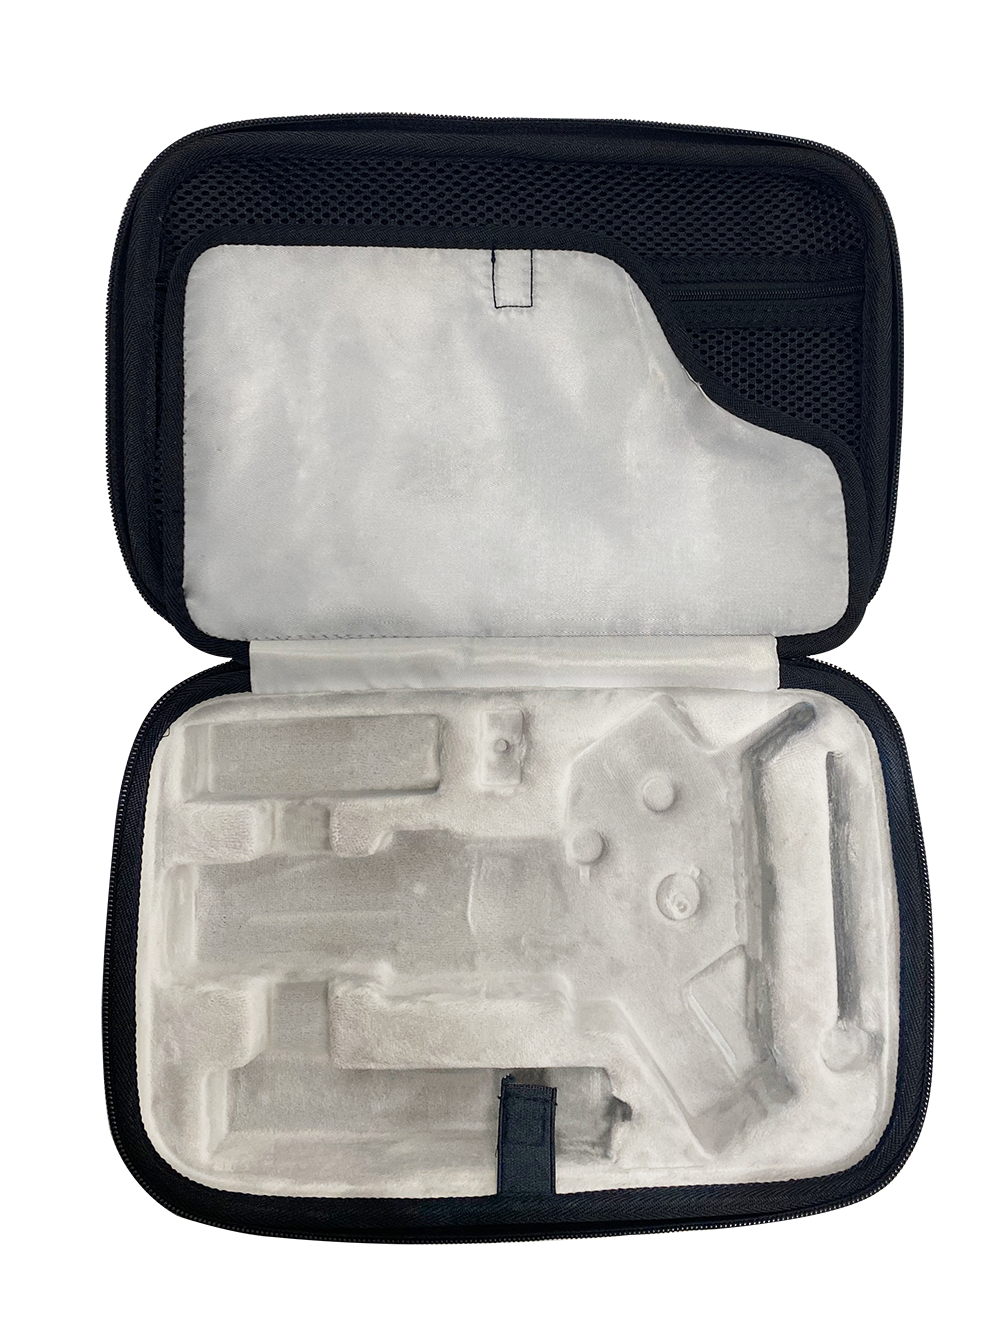 Portable-Storage-Travel-Bag-for-ZHIYUN-Crane-M3-M2S-M2-S-Shoulder-Bag-Carry-Box-for-Gimbal-Stabilize-1973727-14